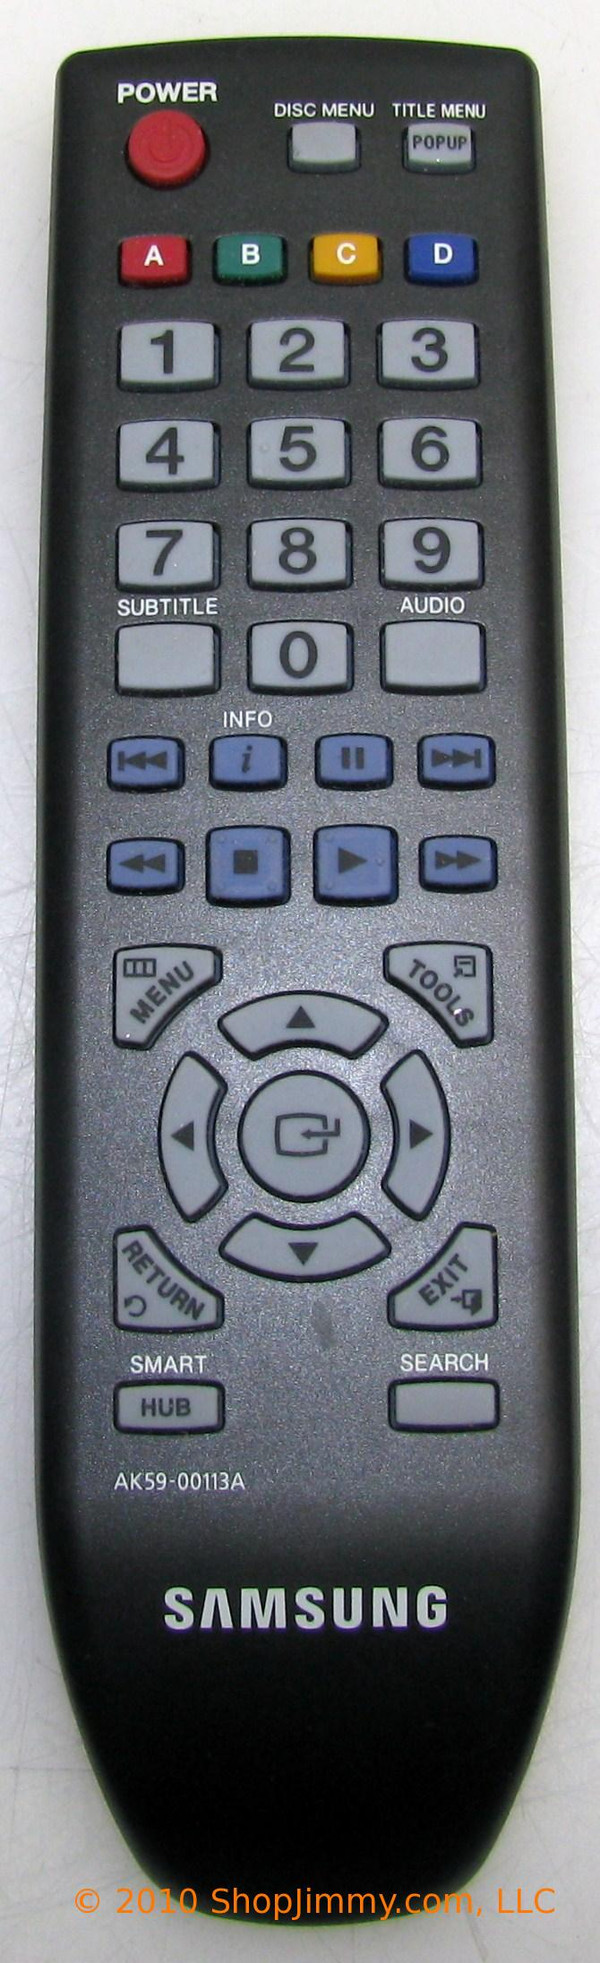 Samsung AK59-00113A Remote Control